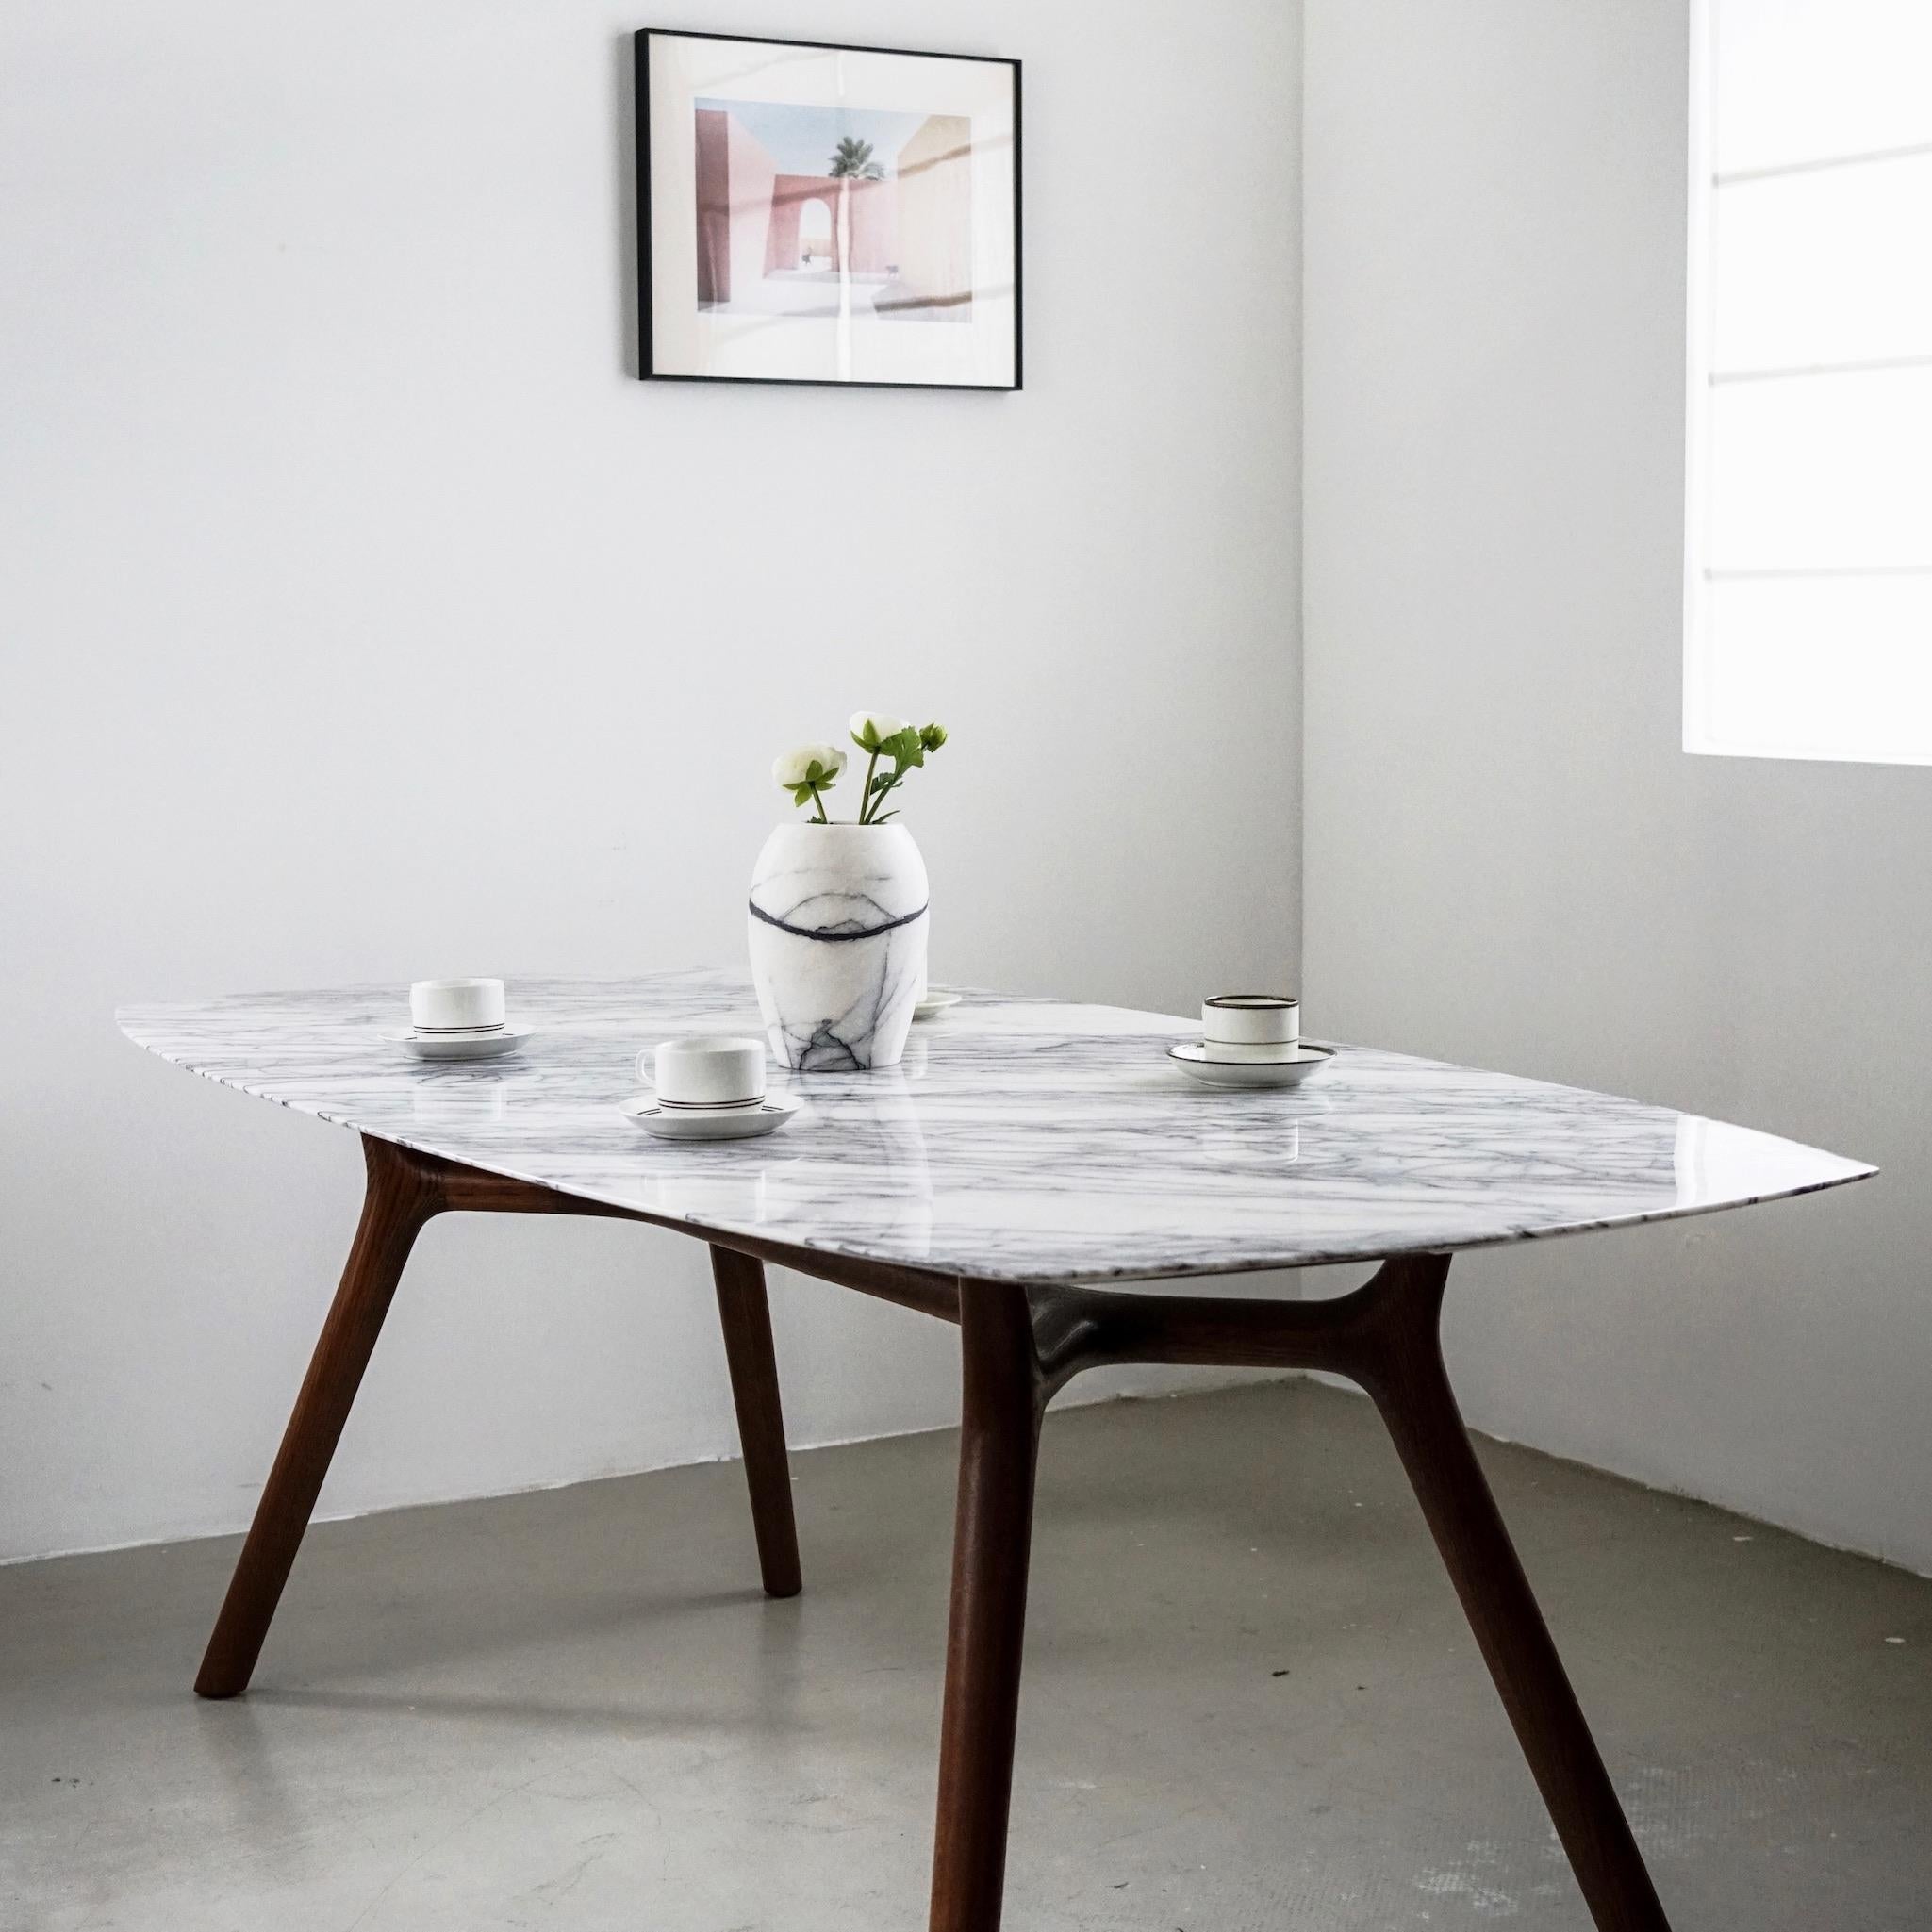 Travertin Table à manger NORDST POUL, marbre blanc Montain italien, design moderne danois en vente